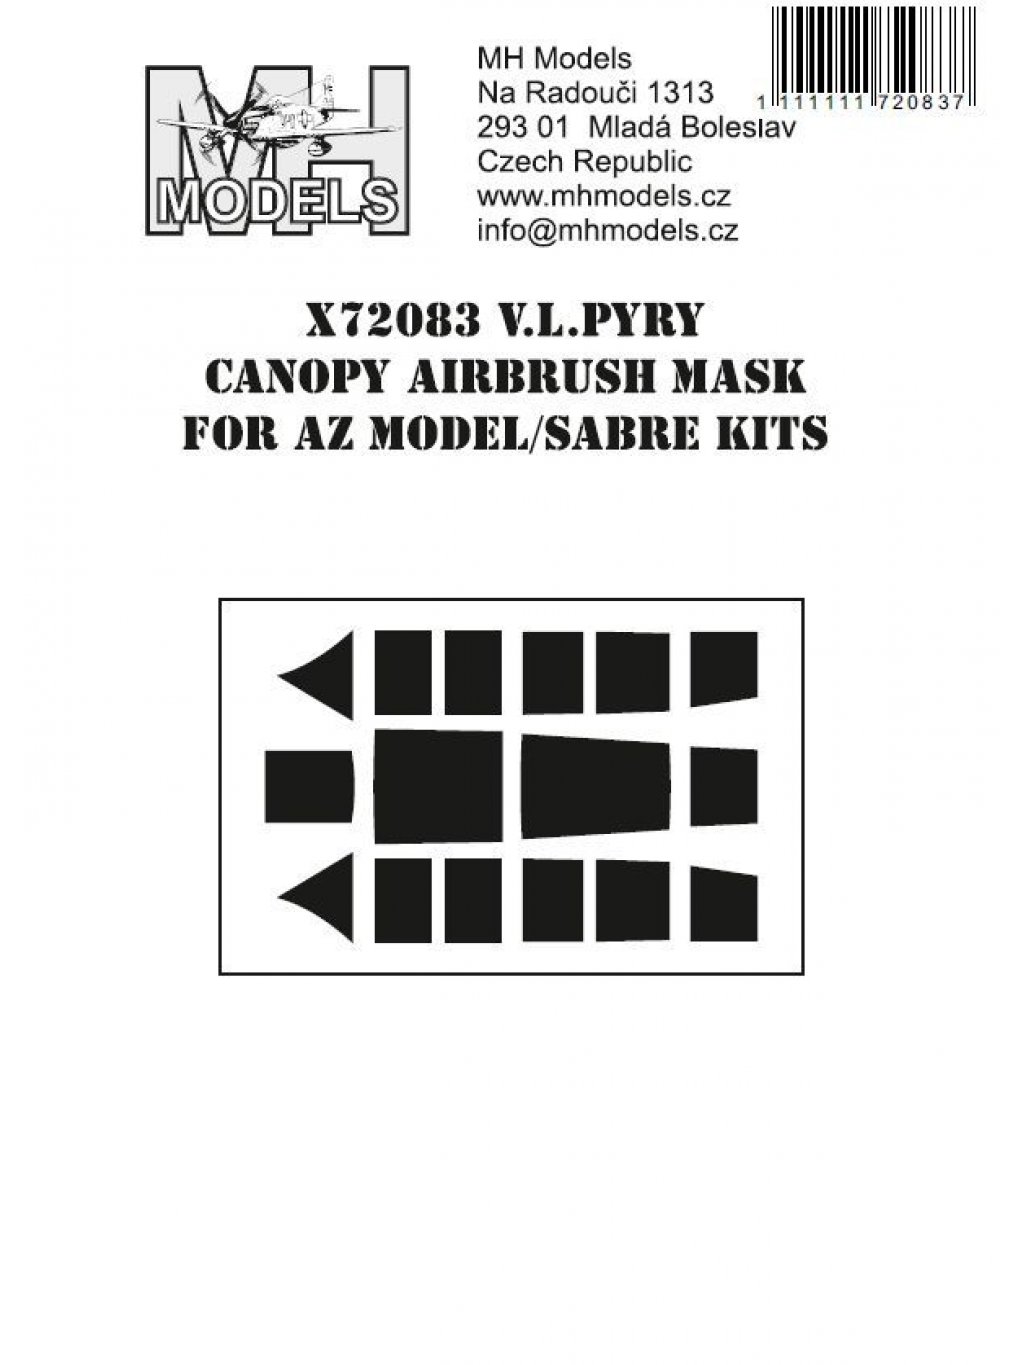 V.L. Pyry canopy airbrush mask for AZ Model/Sabre Kits